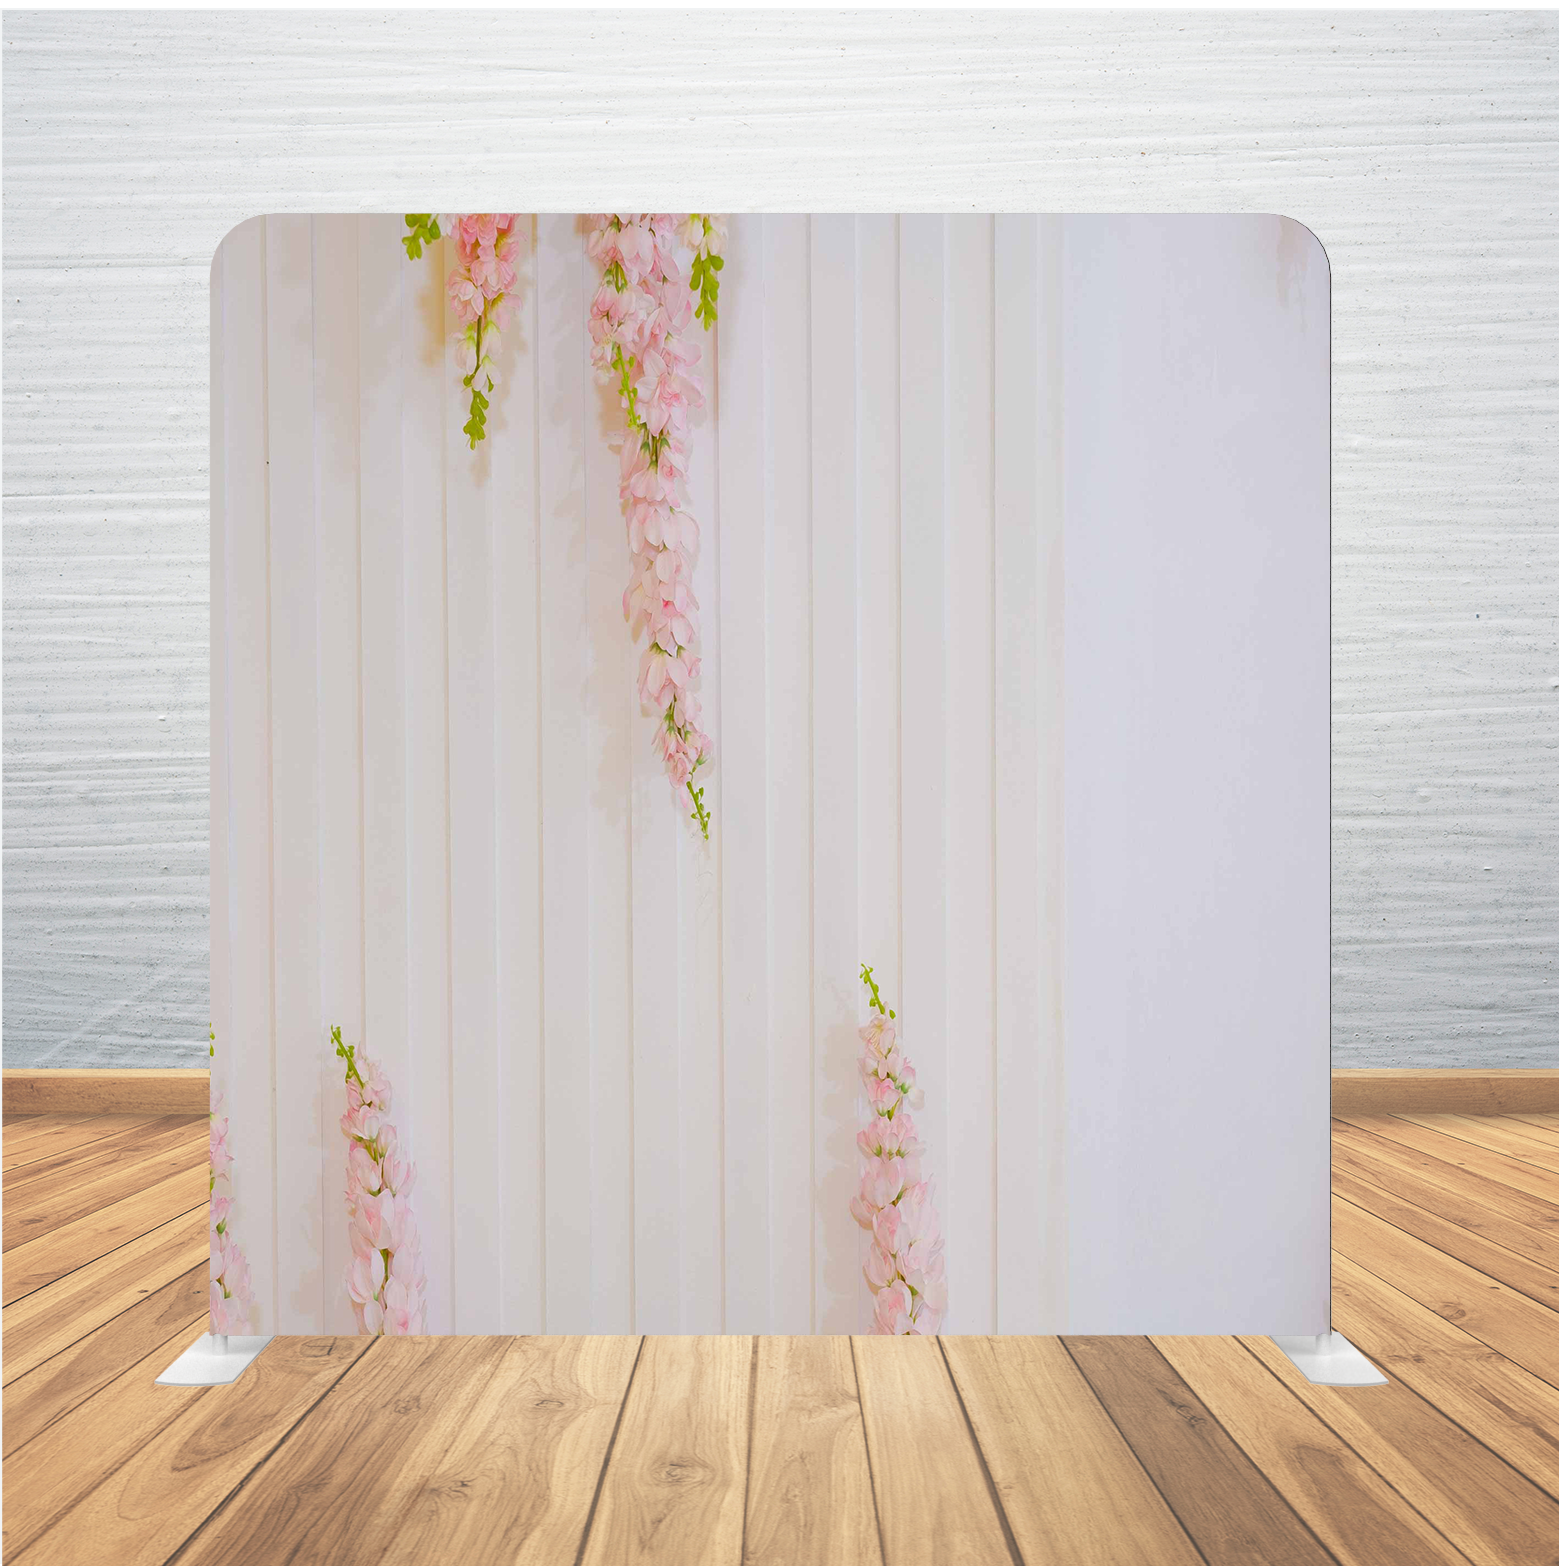 8X8 Pillowcase Tension Backdrop- Four Pink Floral